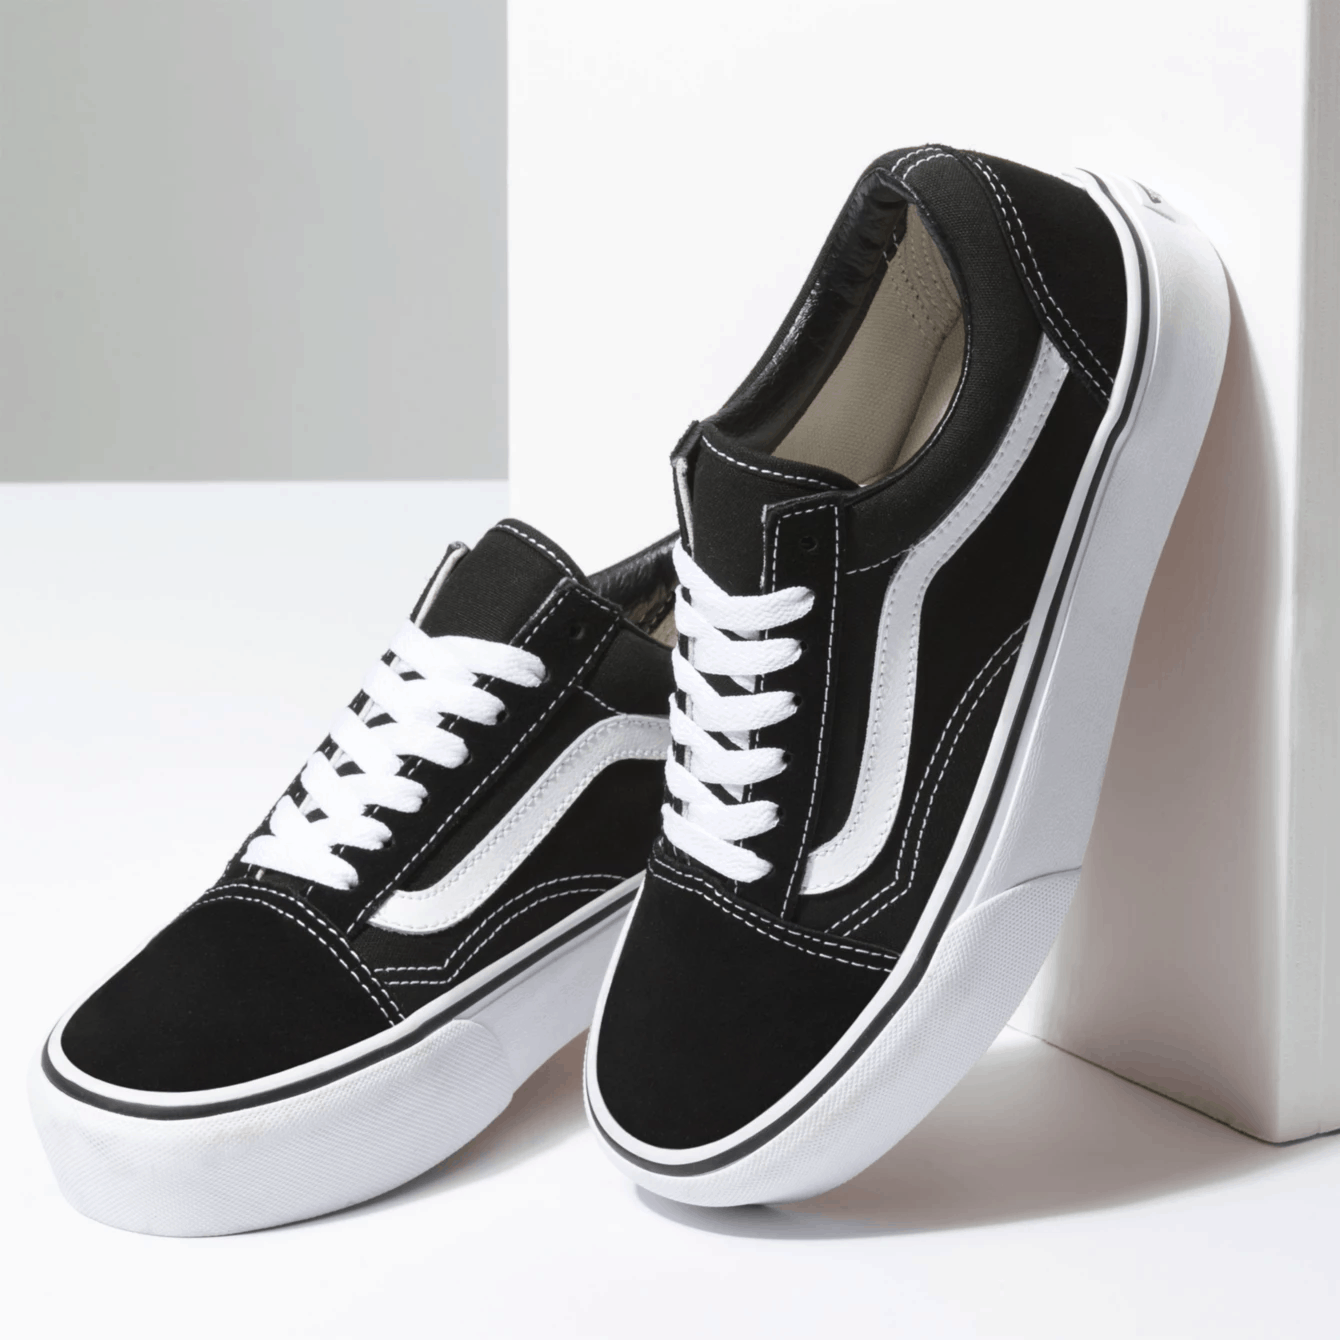 vans black and white sneakers